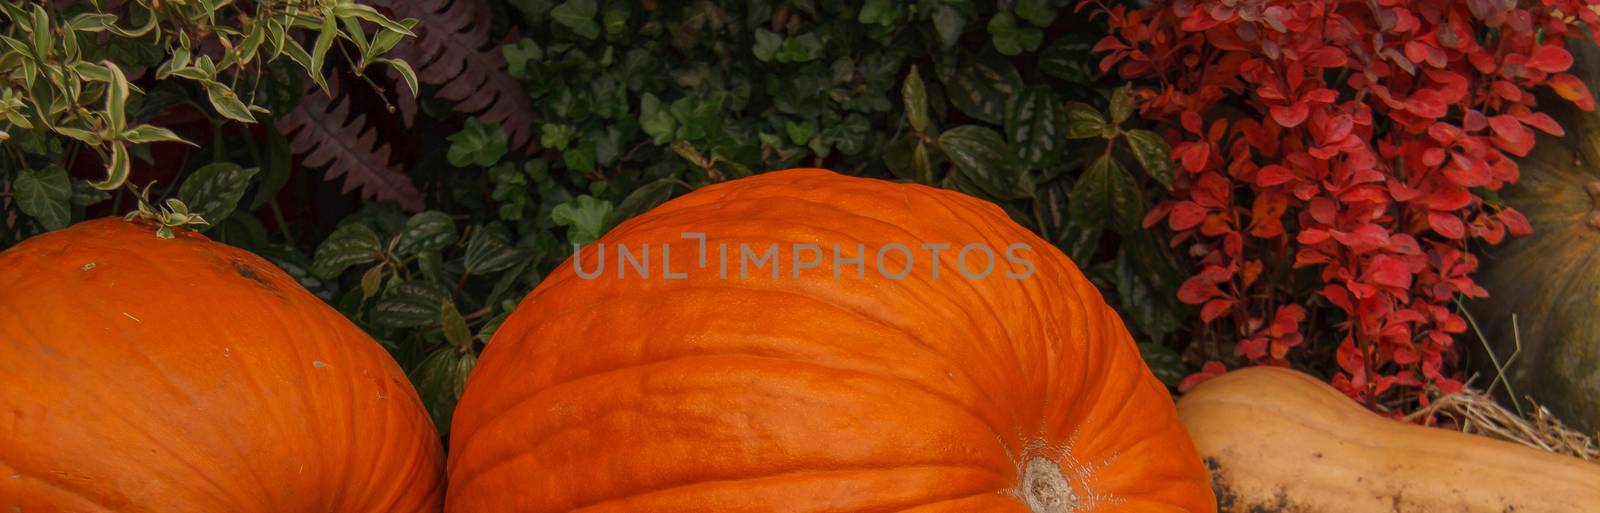 lots of pumpkins at outdoor farmer's market, autumn pumpkin decor for thanksgiving